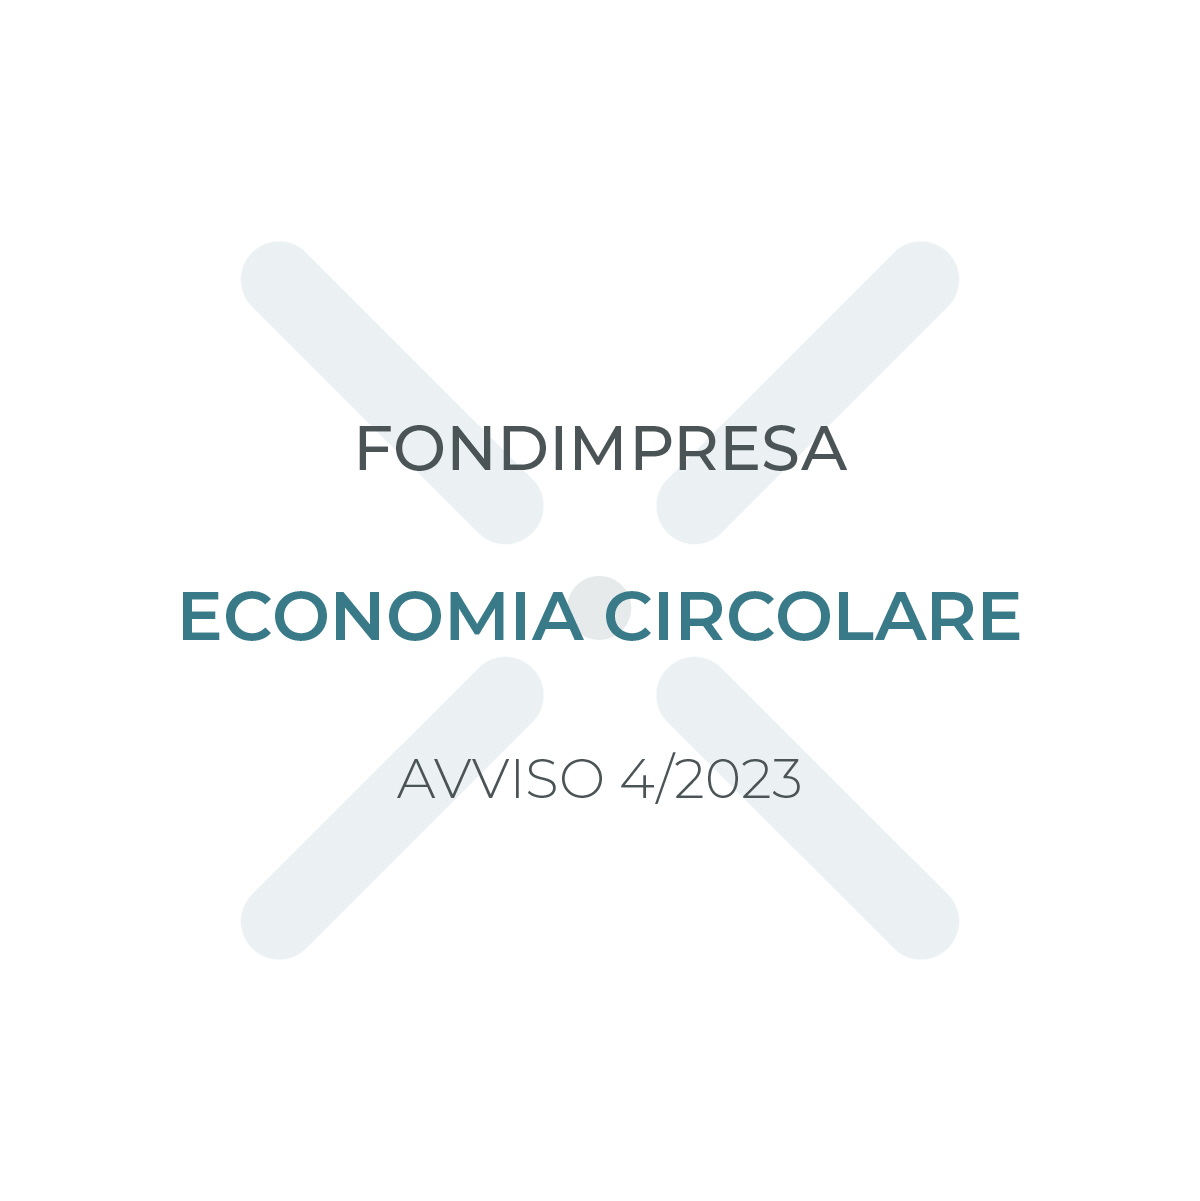 AVVISO 4-2023-ECONOMIA CIRCOLARE-fondimpresa-economia-nexusproskills